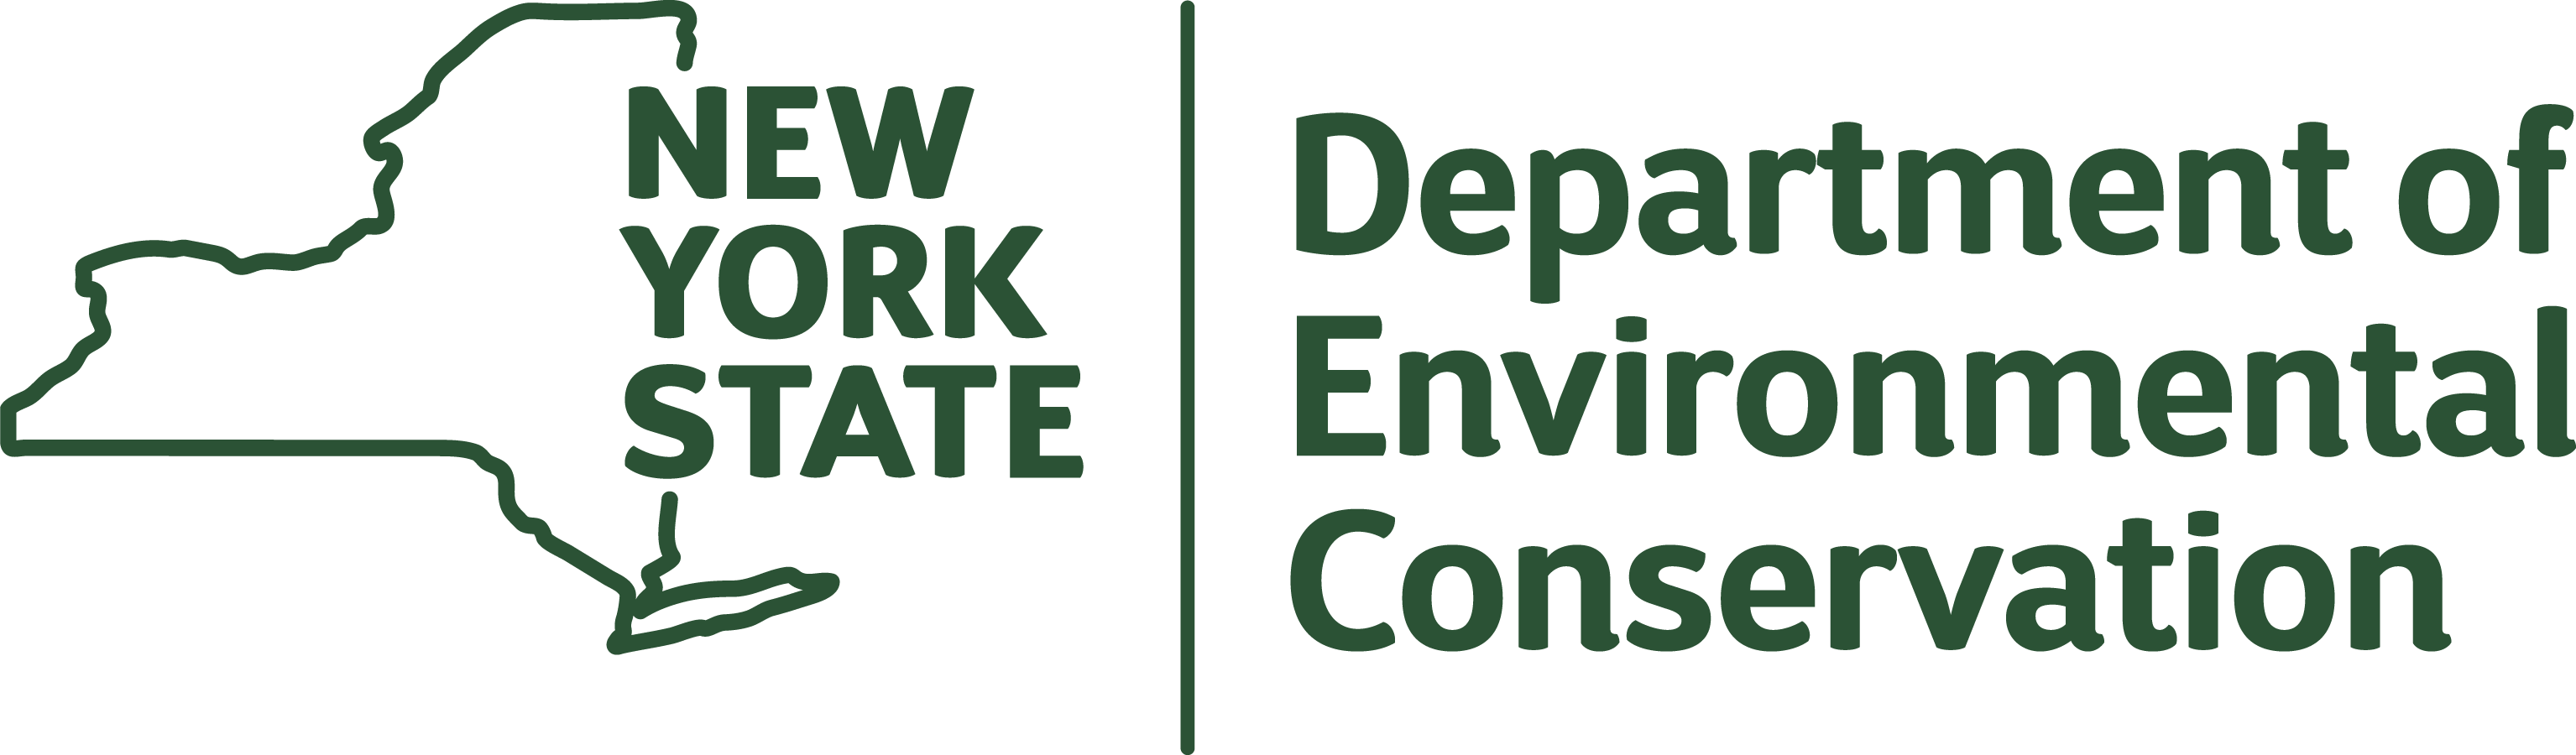 NY Dept. of Environmental Conservation